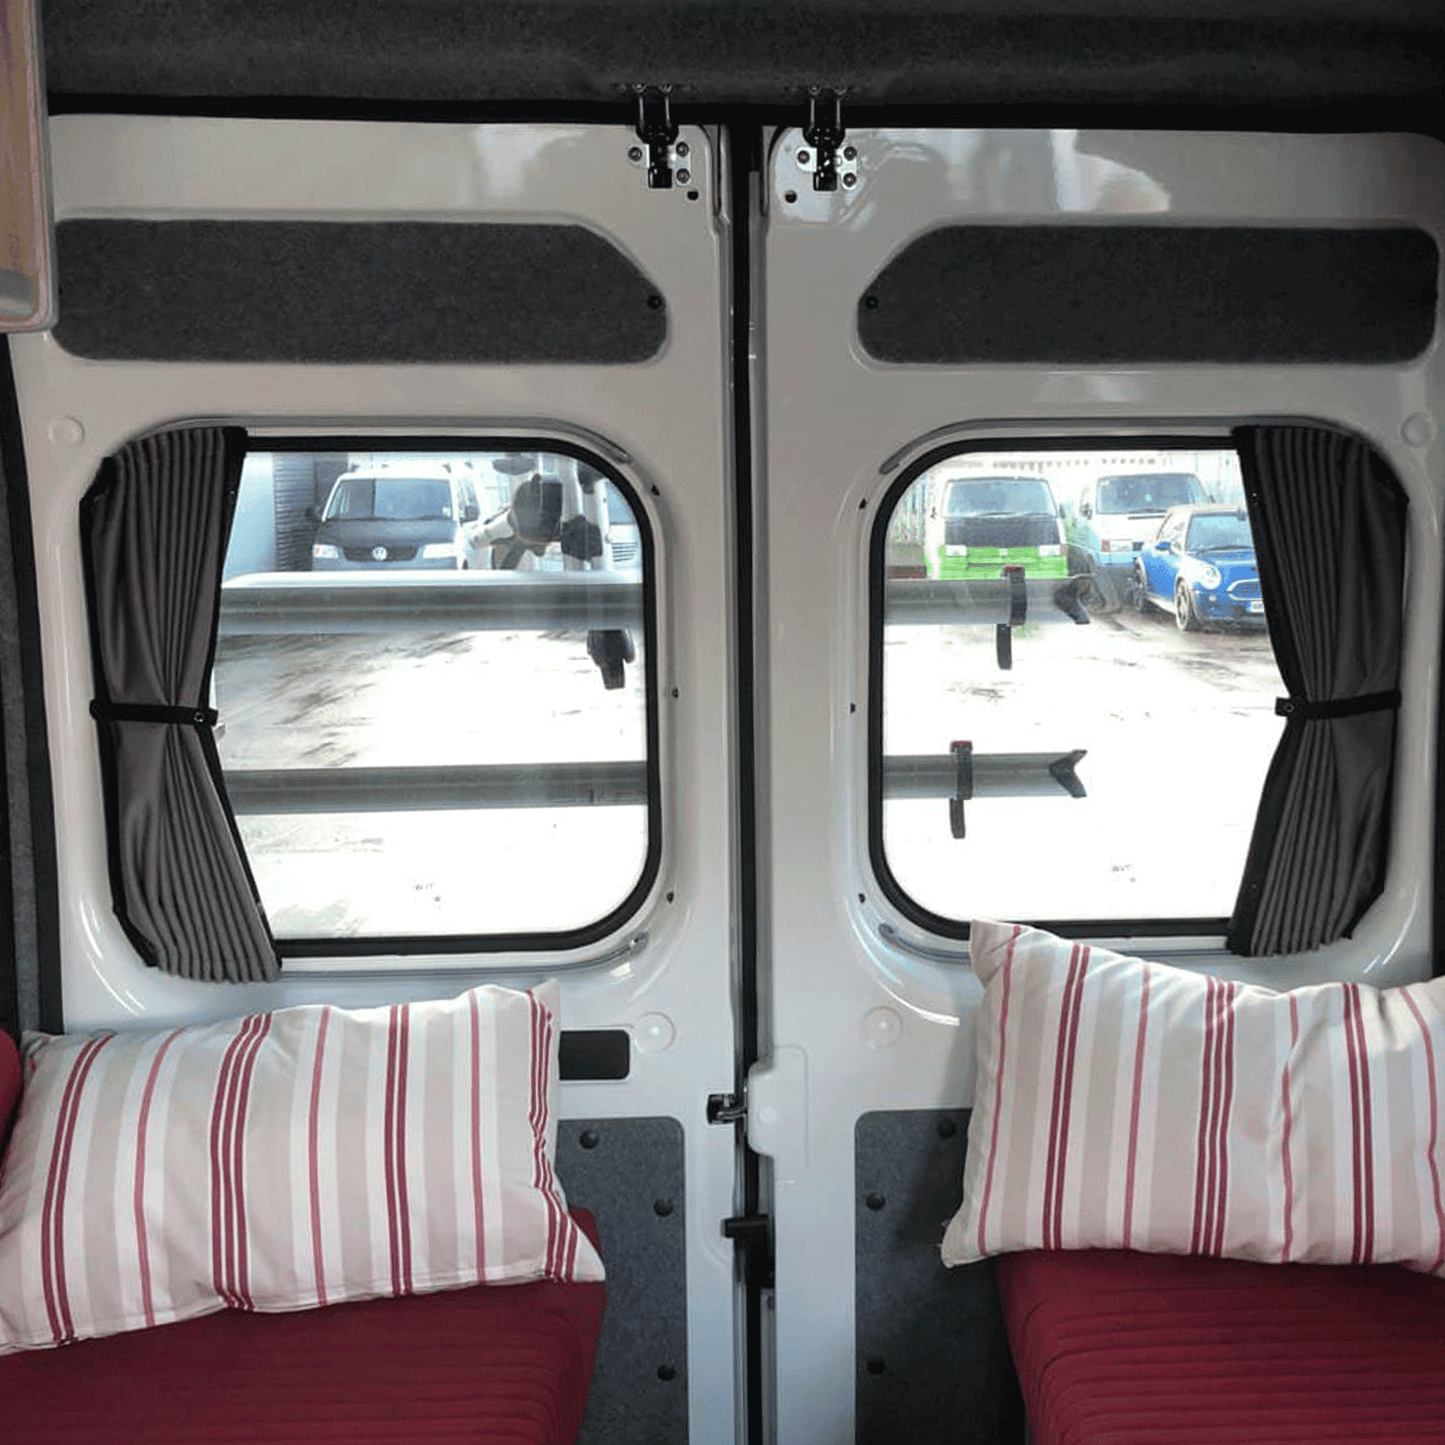 Fiat Scudo Premium 1 x Barn door Window Curtain Van-X